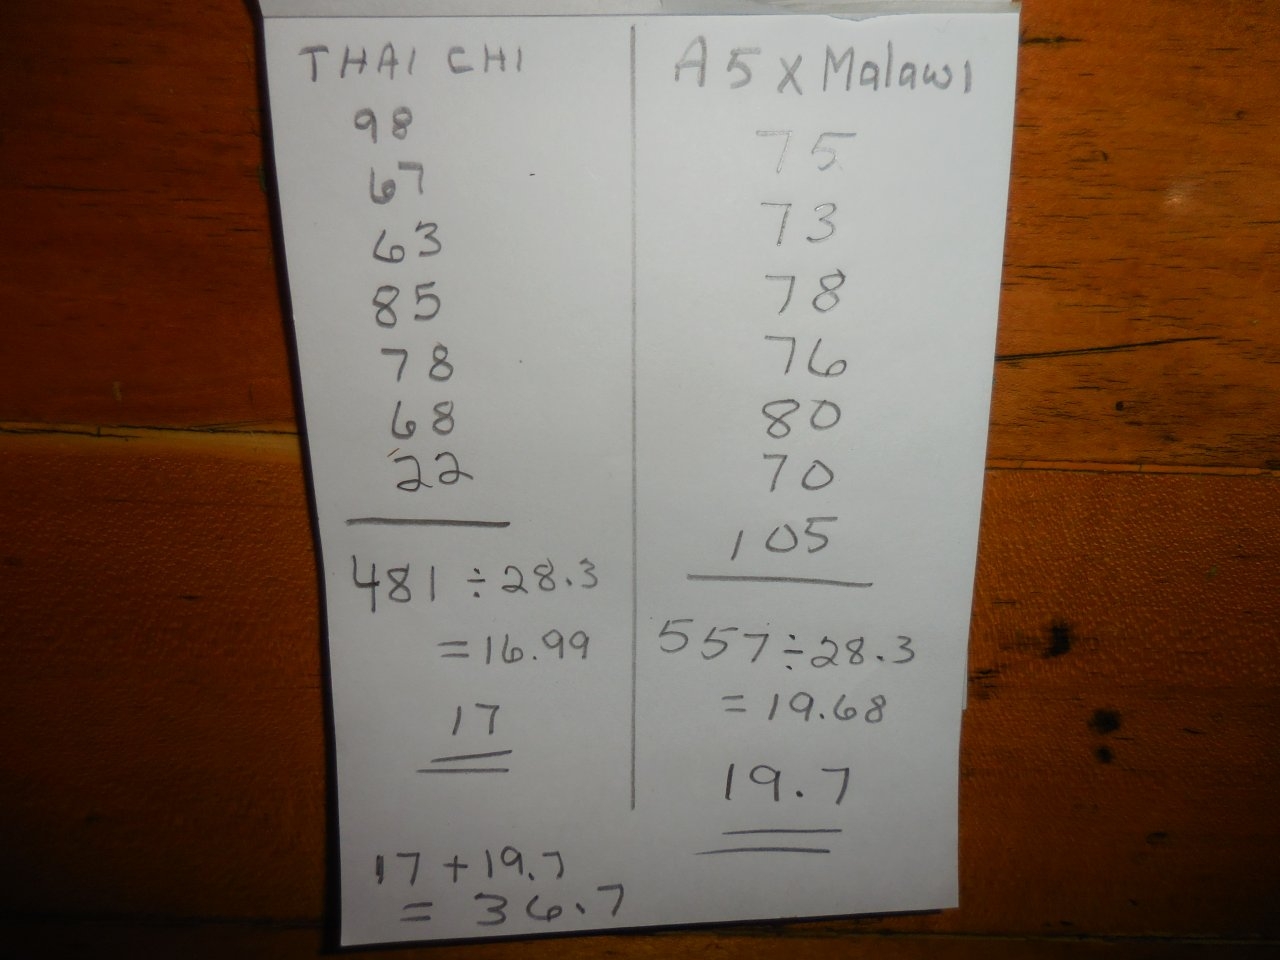 A5 X Malawi and Thai Chi's jarred! 011.jpg